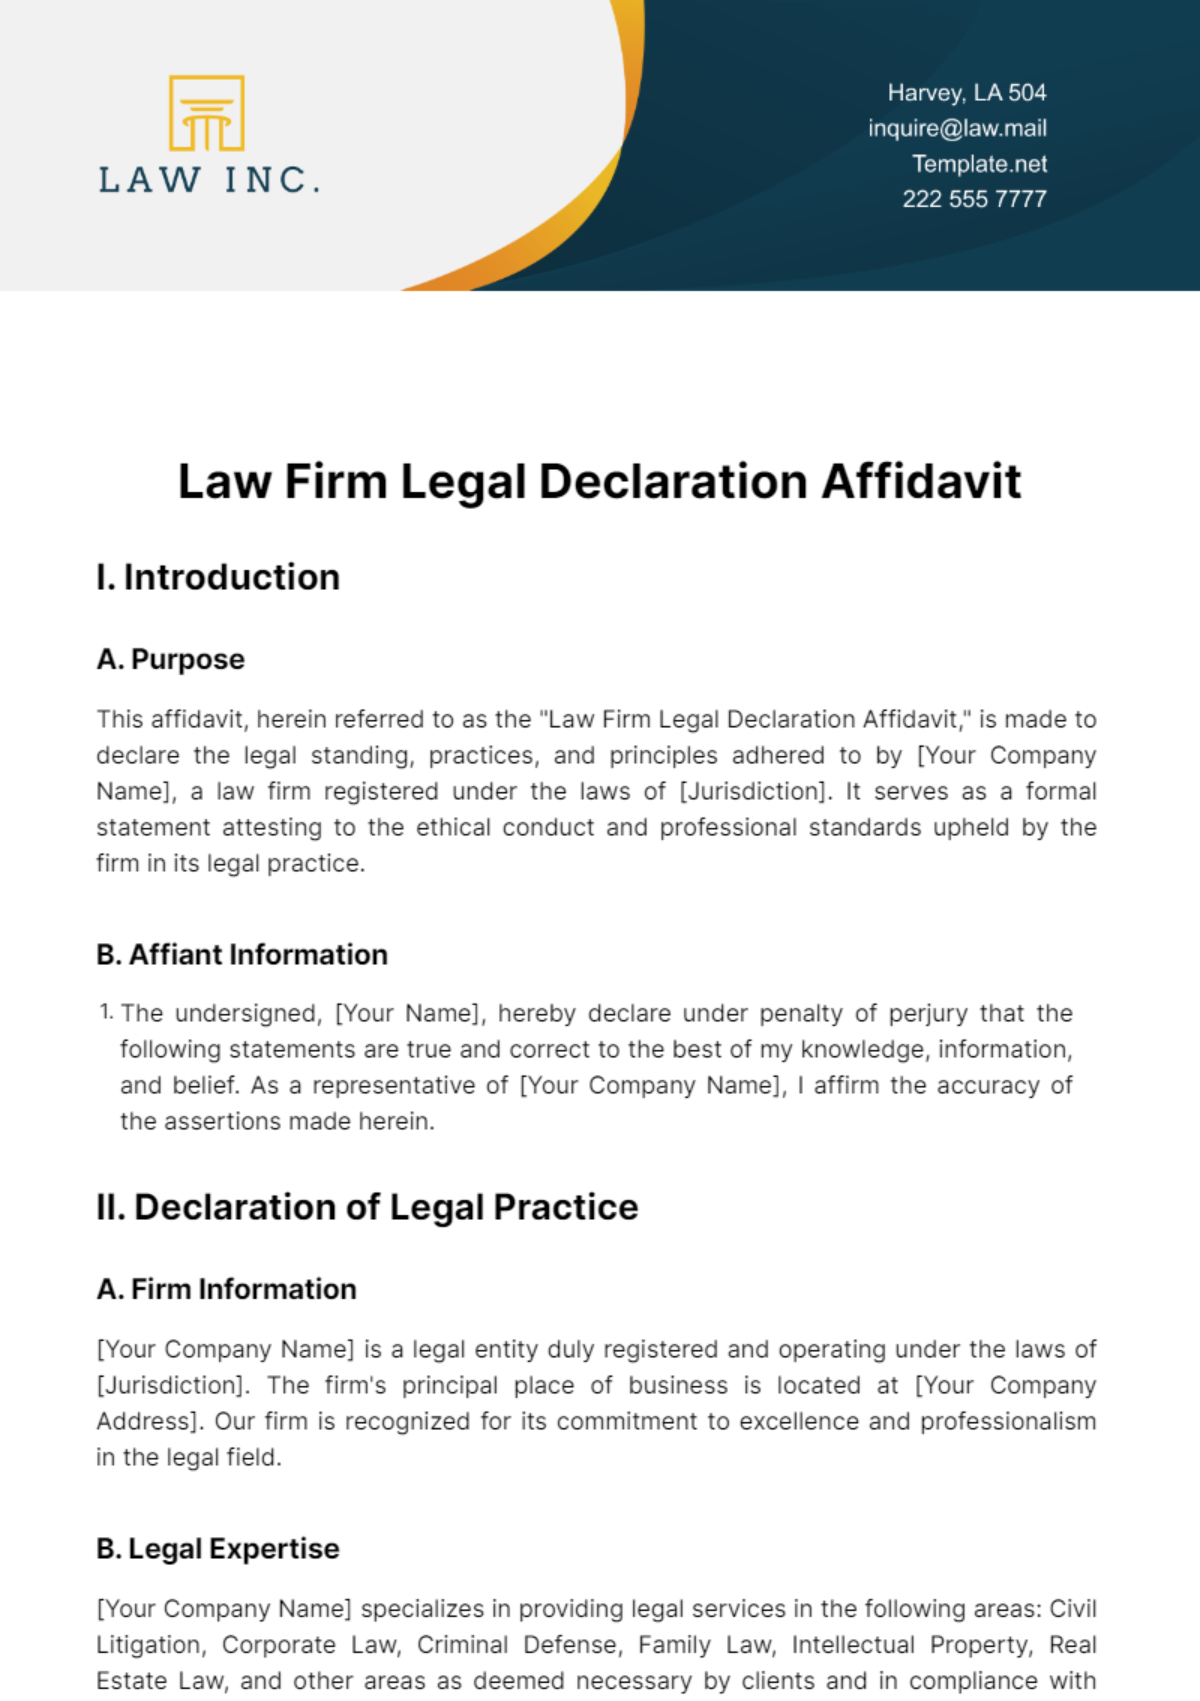 Free Law Firm Legal Declaration Affidavit Template